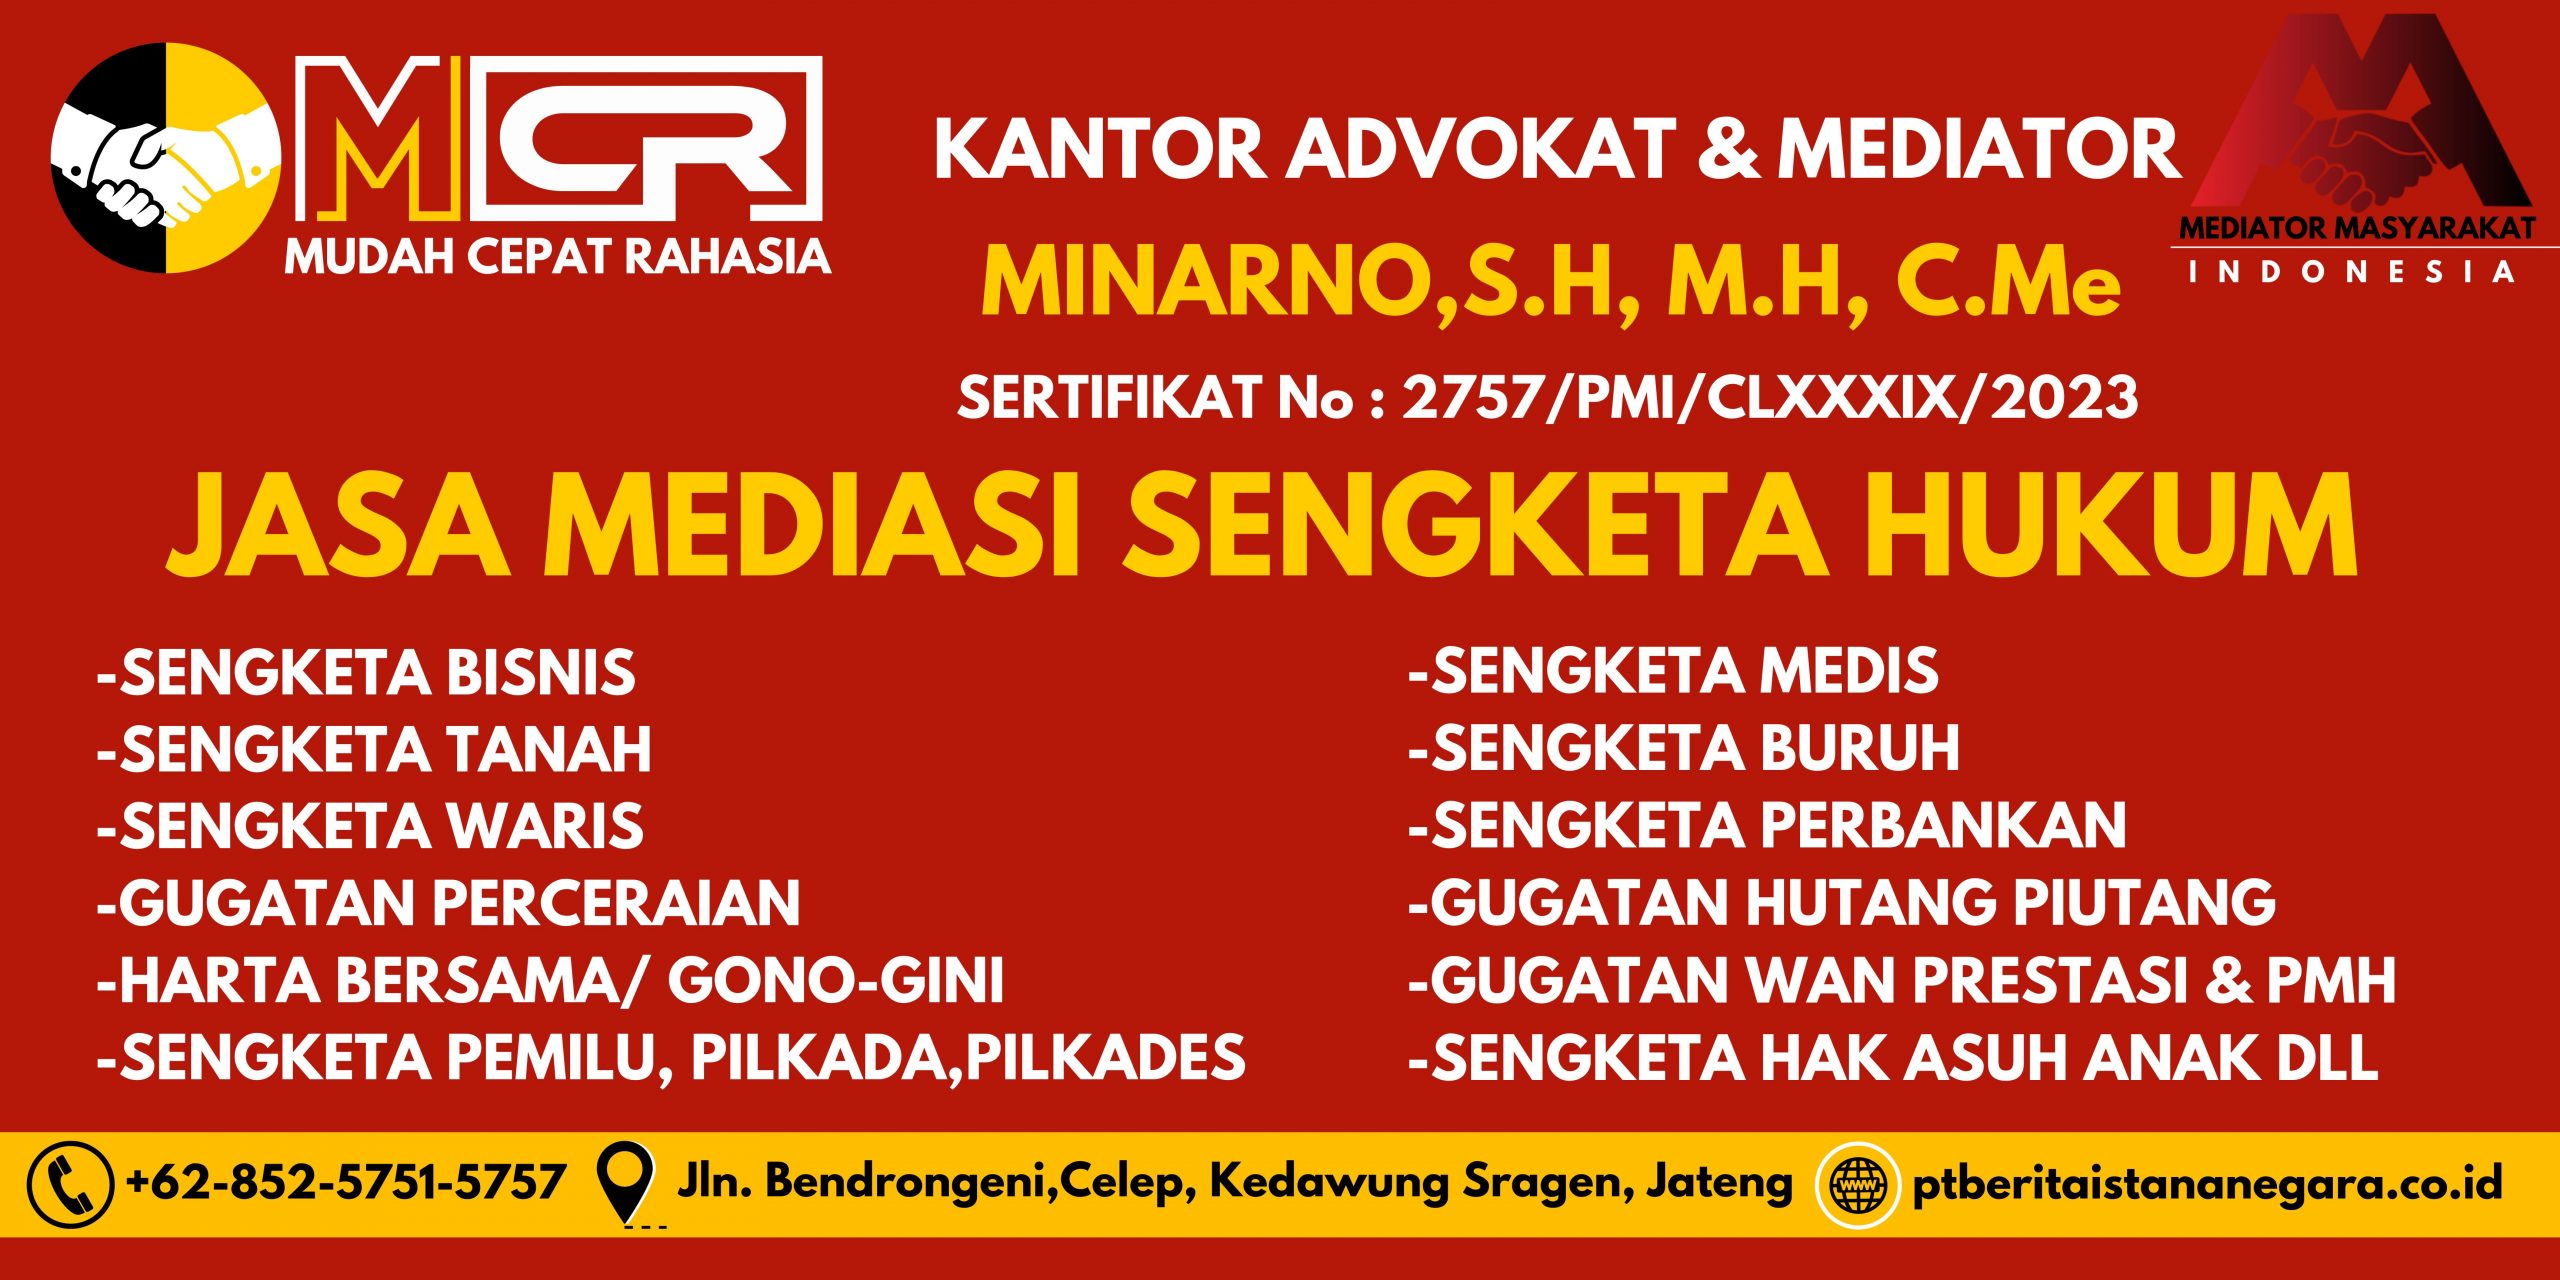 Kantor Advokat dan Mediator Minarno,S.H, M.H, C.Me